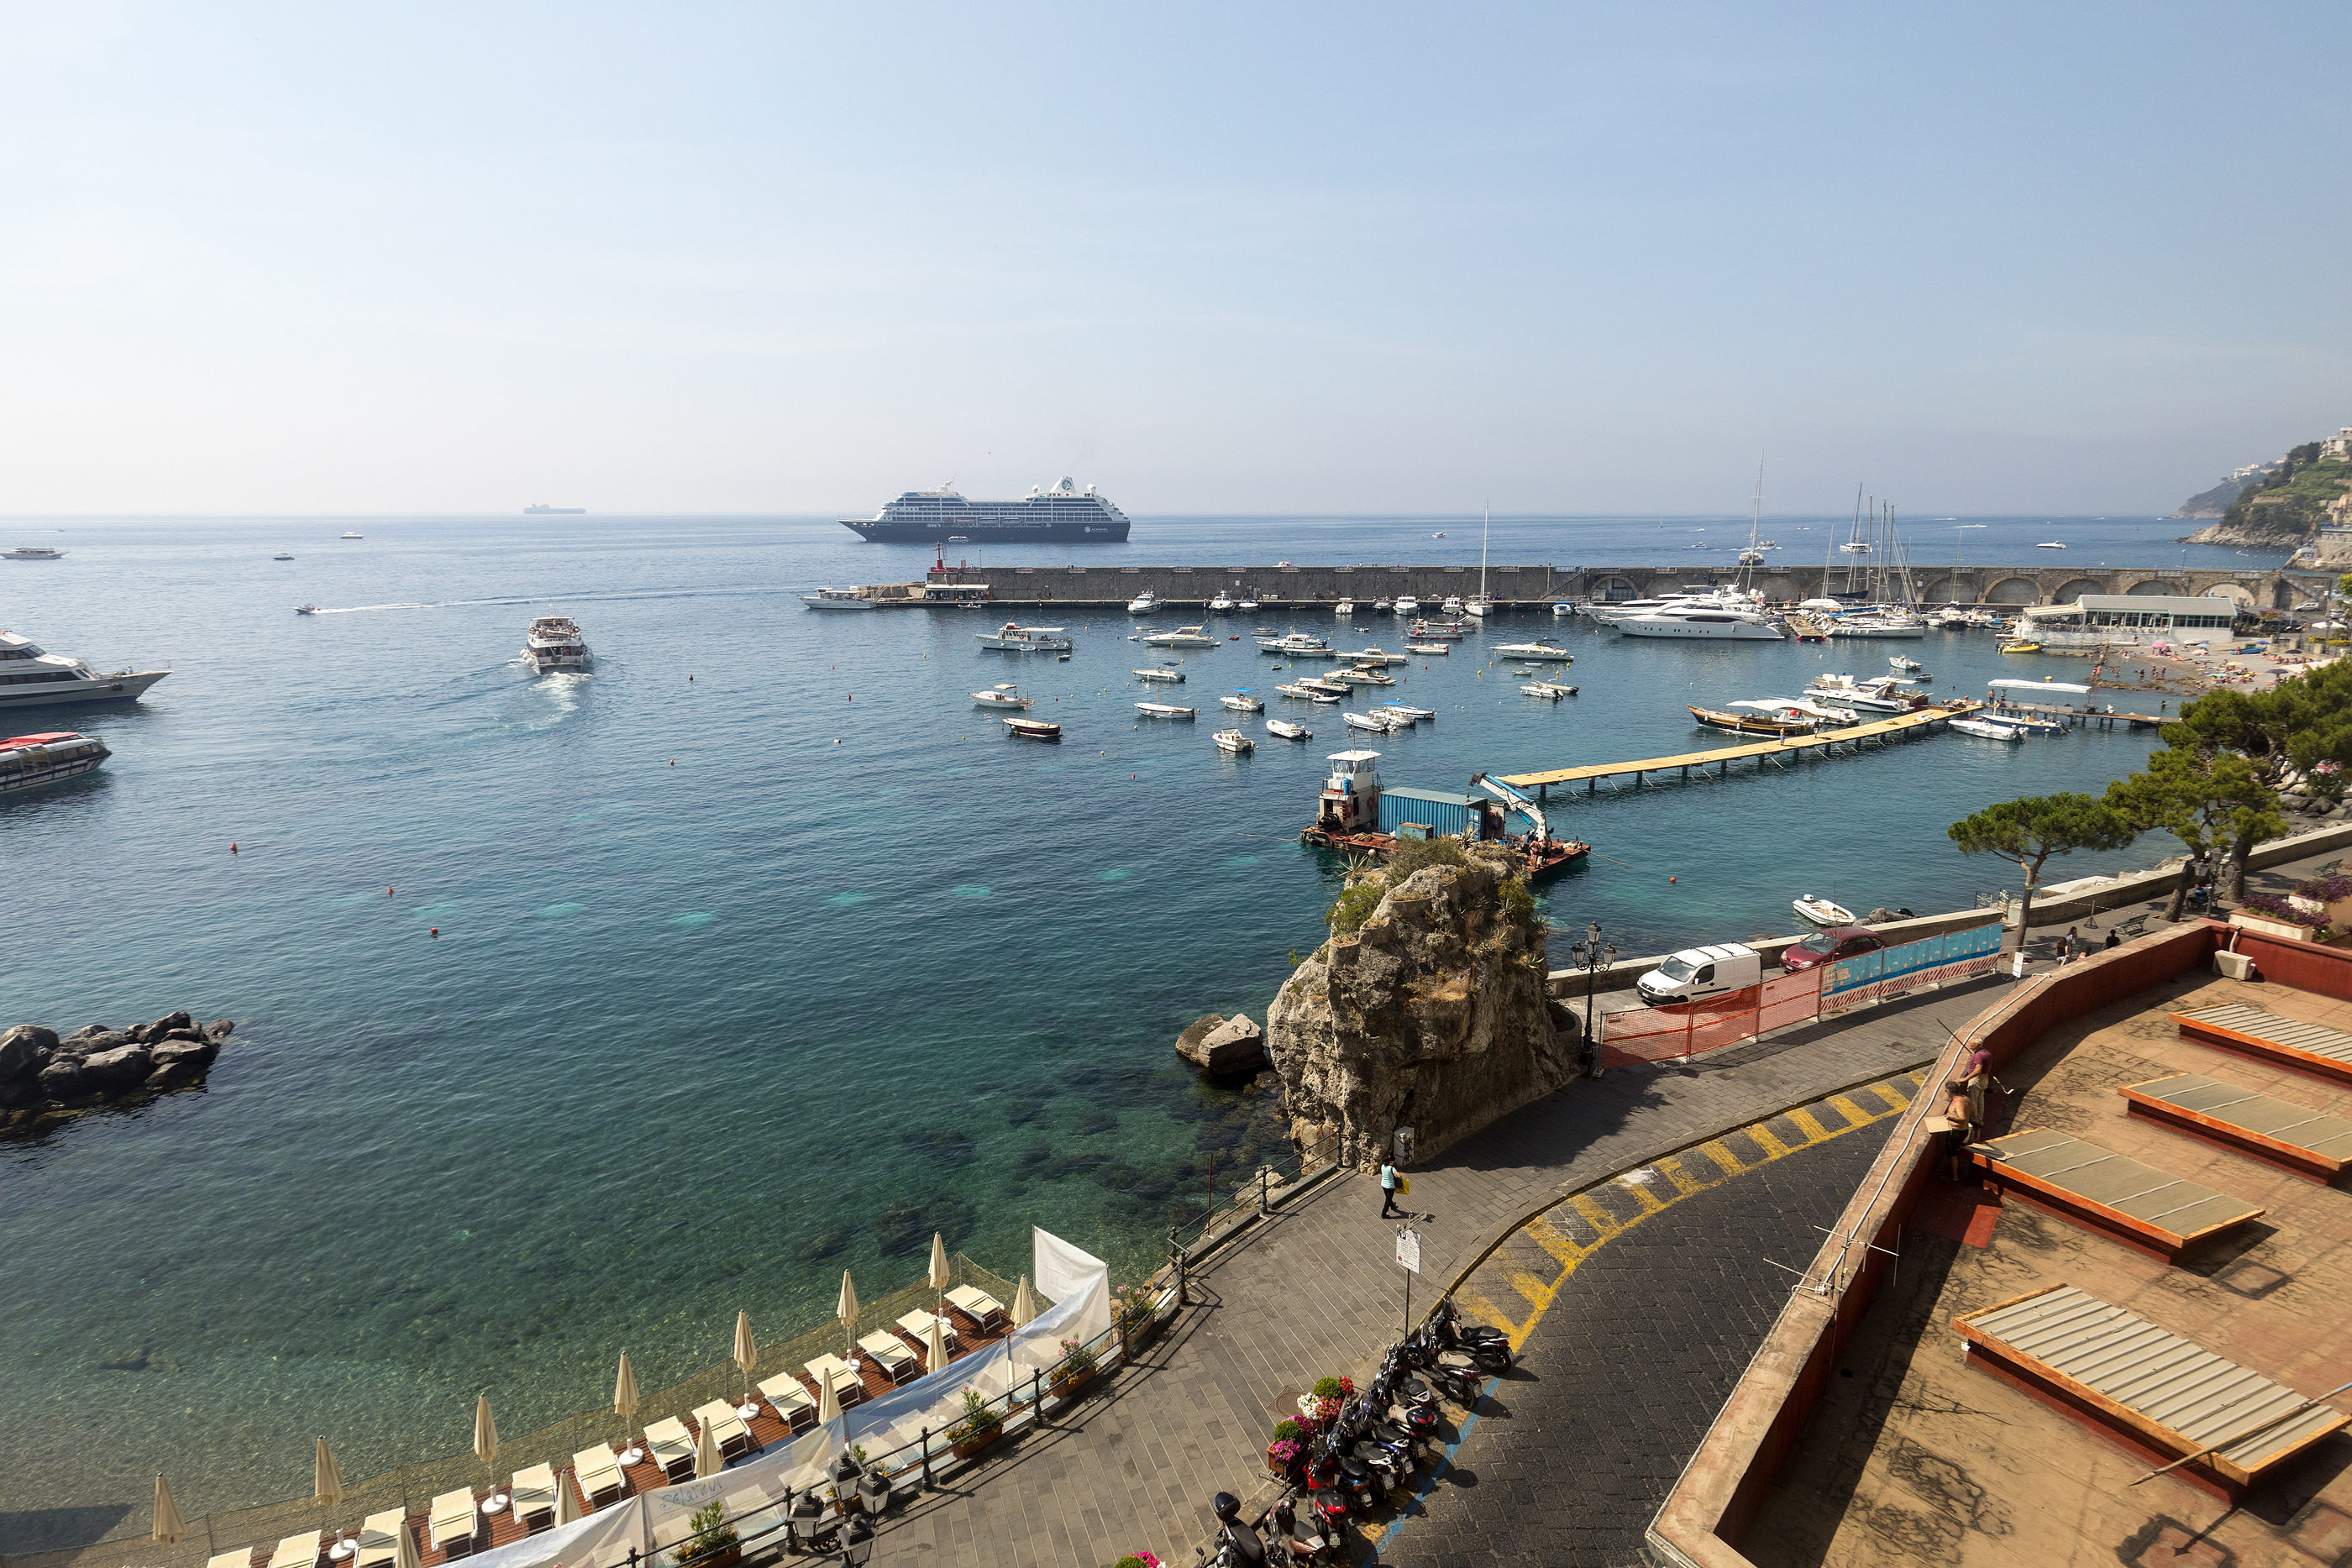 The marina and port at Amalfi